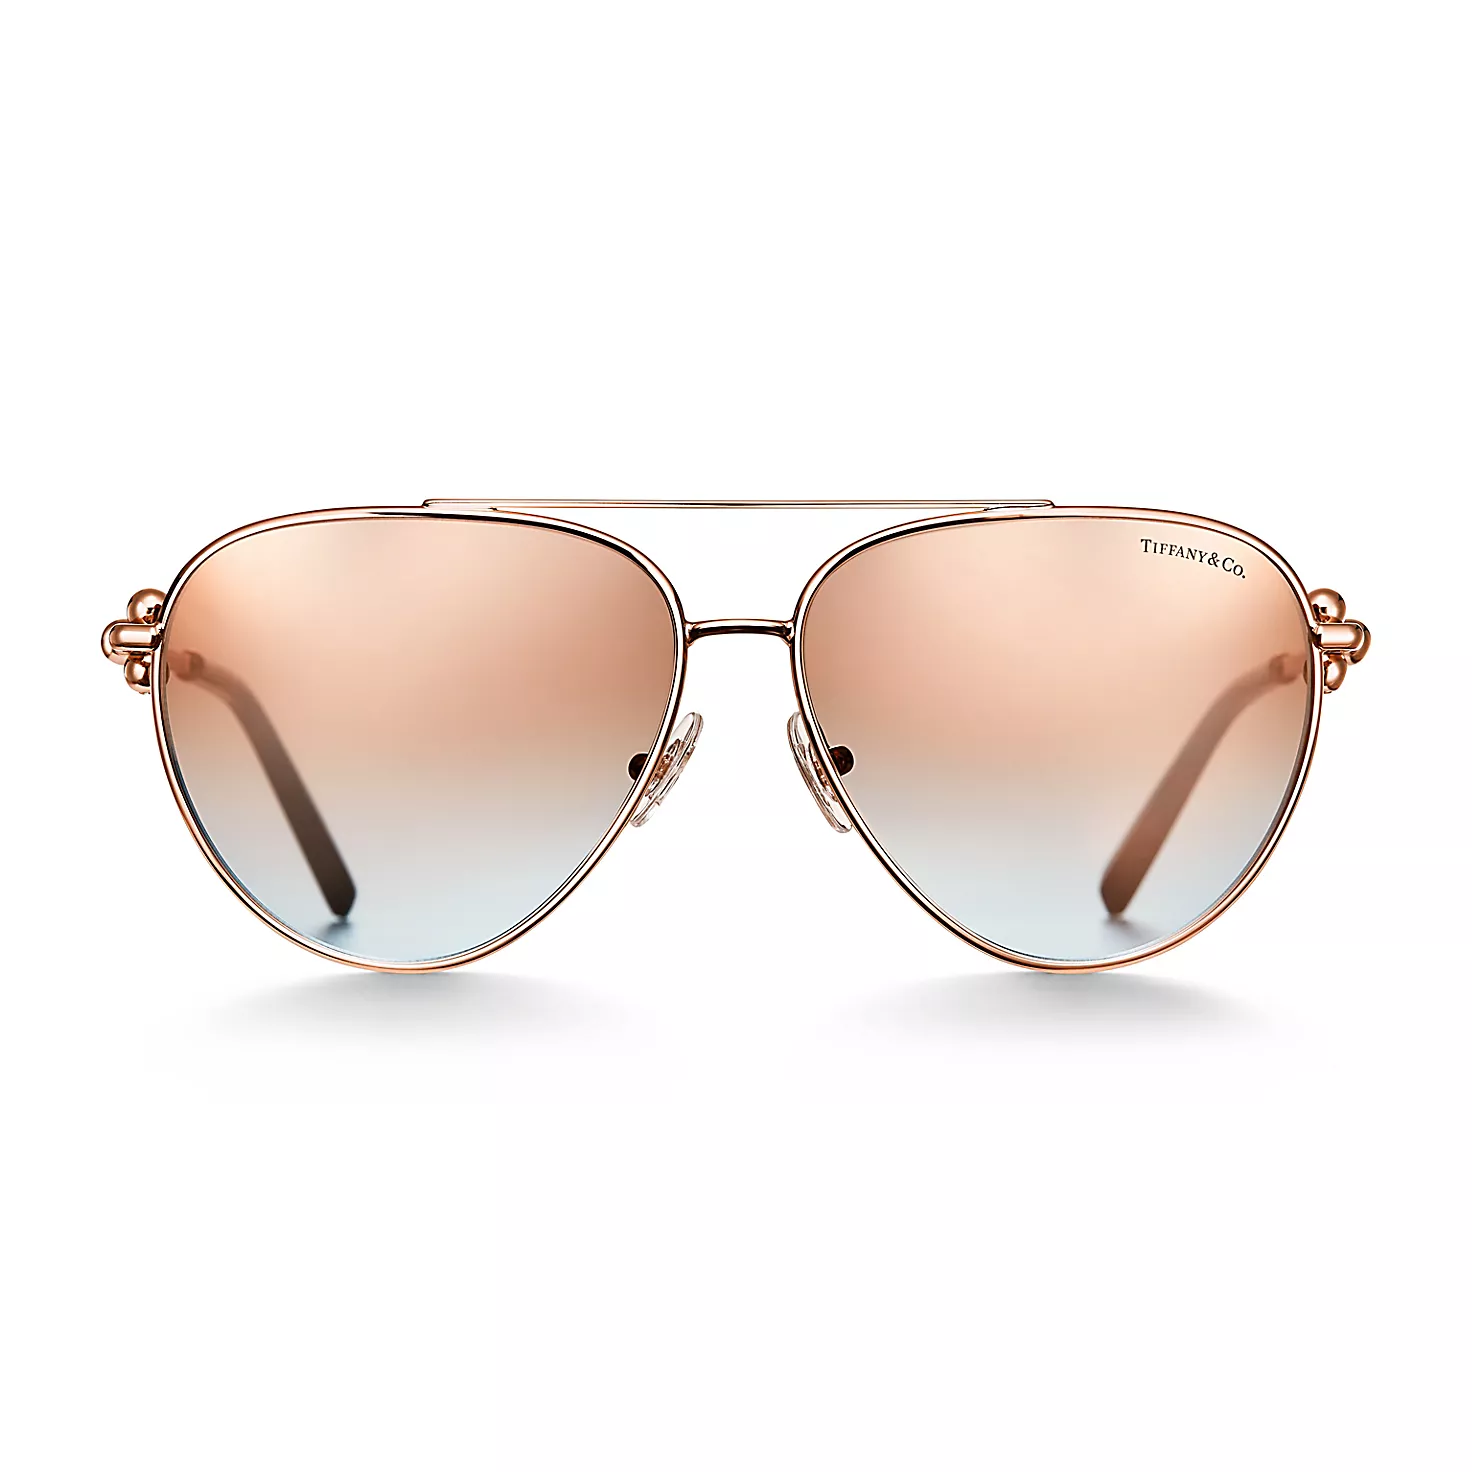 Tiffany HardWear:선글라스, 로즈 골드 컬러 메탈에 핑크 렌즈 세팅 이미지 번호 2